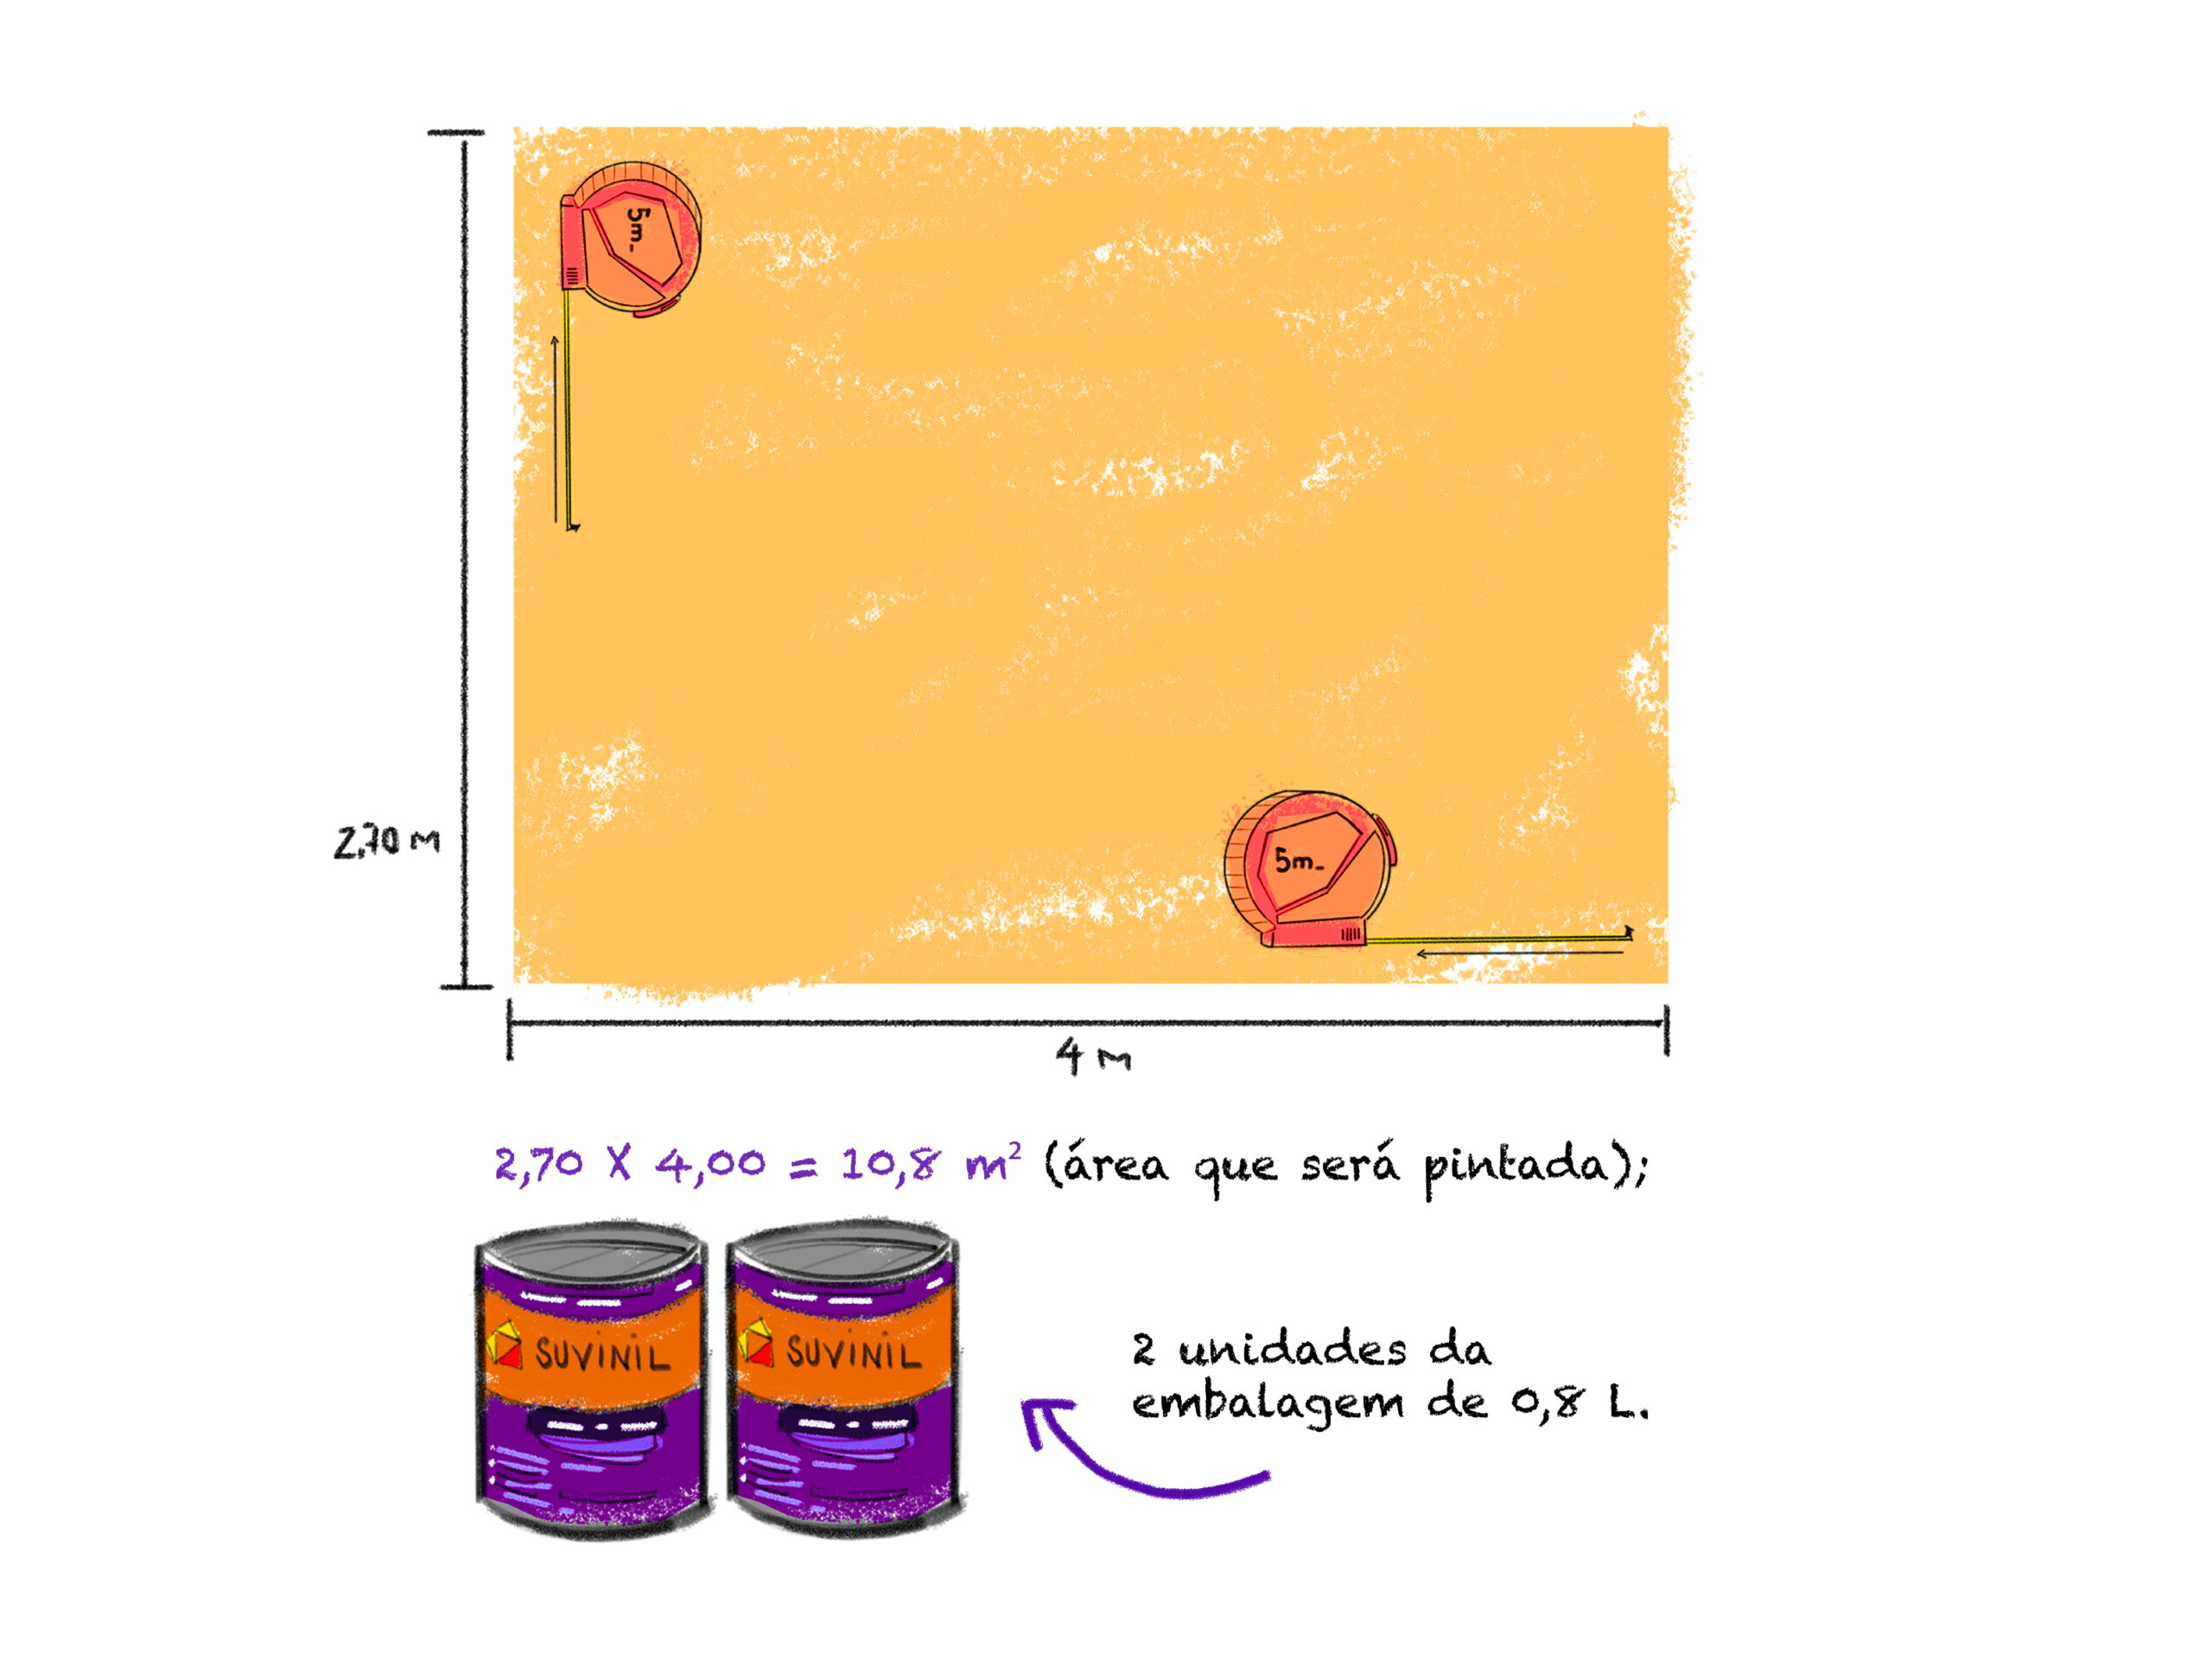 imagem explicativa sobre como calcular tinta